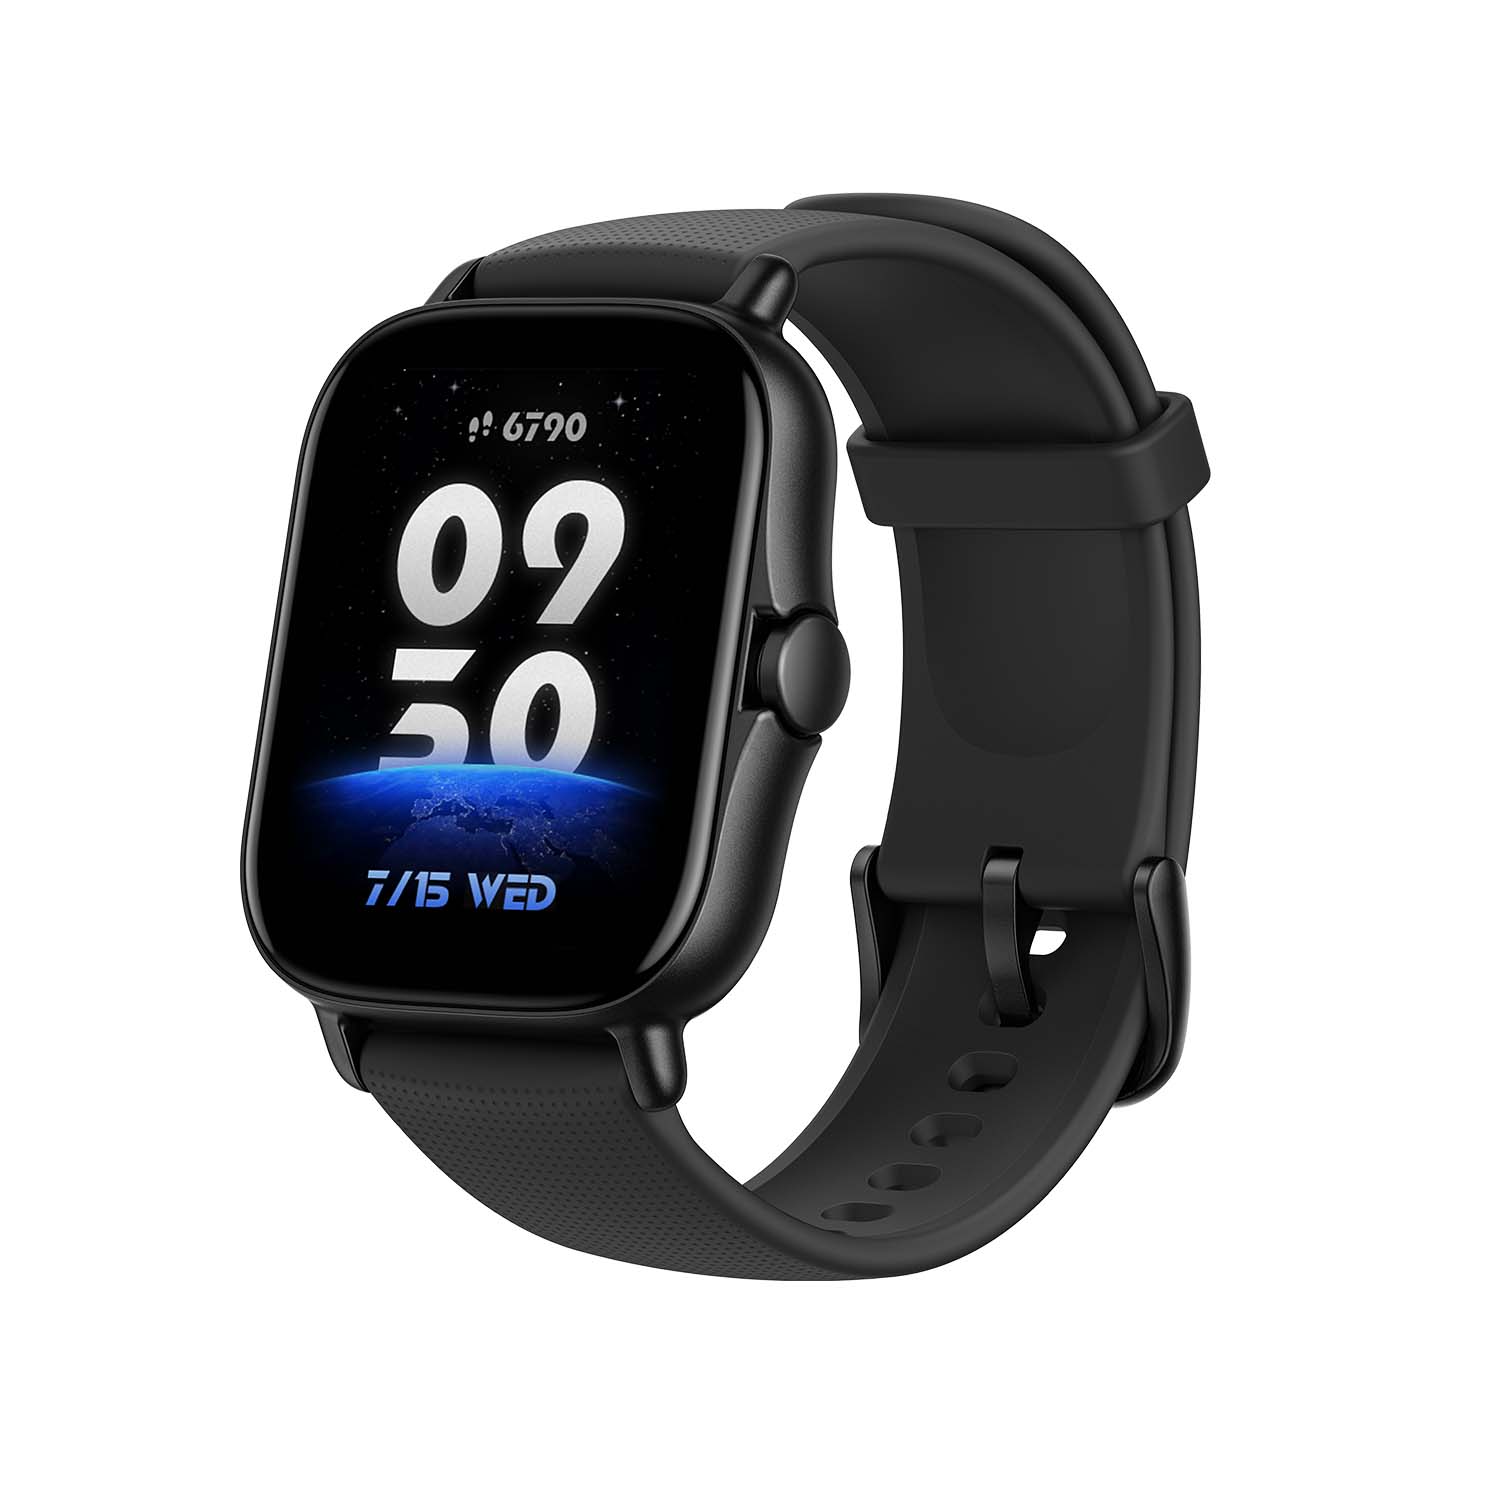 Buy Amazfit GTS 2 Smartwatch with GPS, Black Online